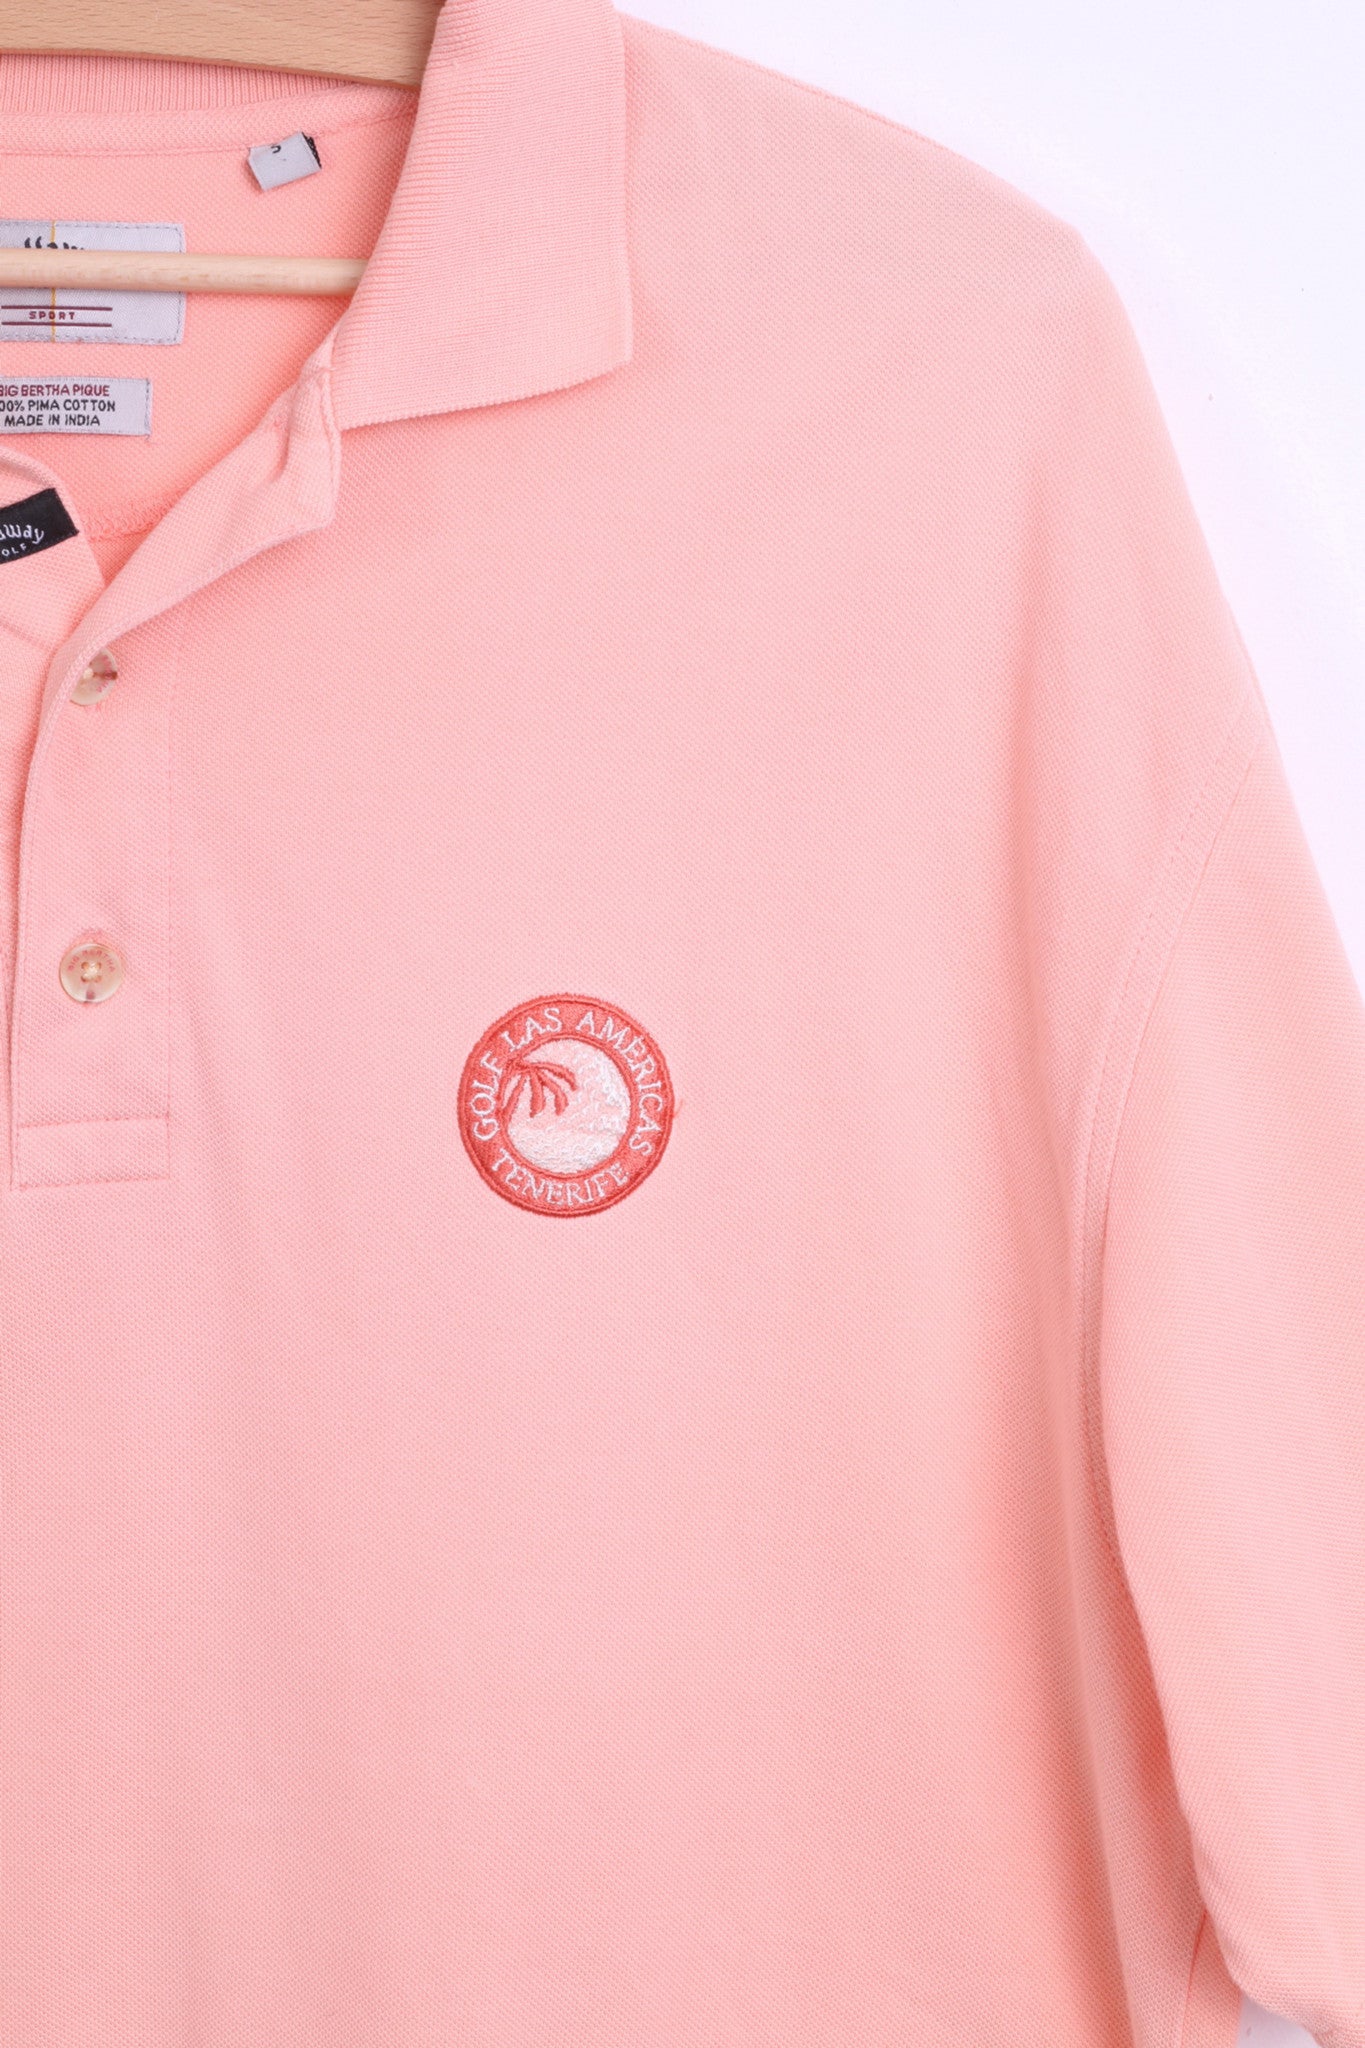 Callaway Golf Mens S Polo Shirt Peach LAS AMERICAS TENERIFE Big Bertha Pique - RetrospectClothes